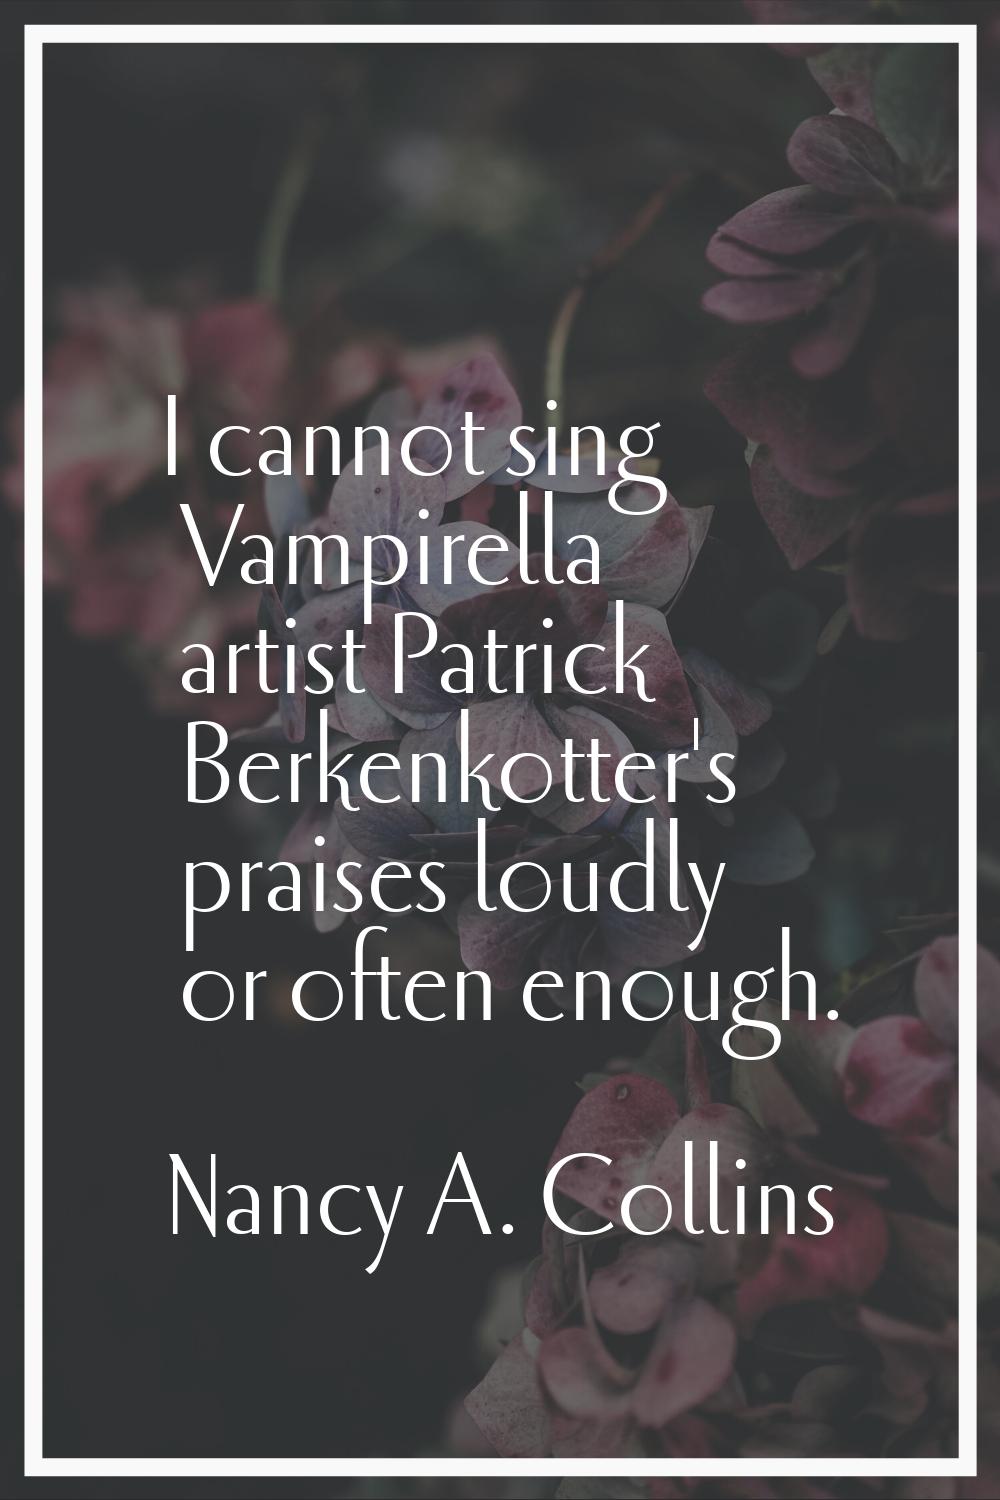 I cannot sing Vampirella artist Patrick Berkenkotter's praises loudly or often enough.